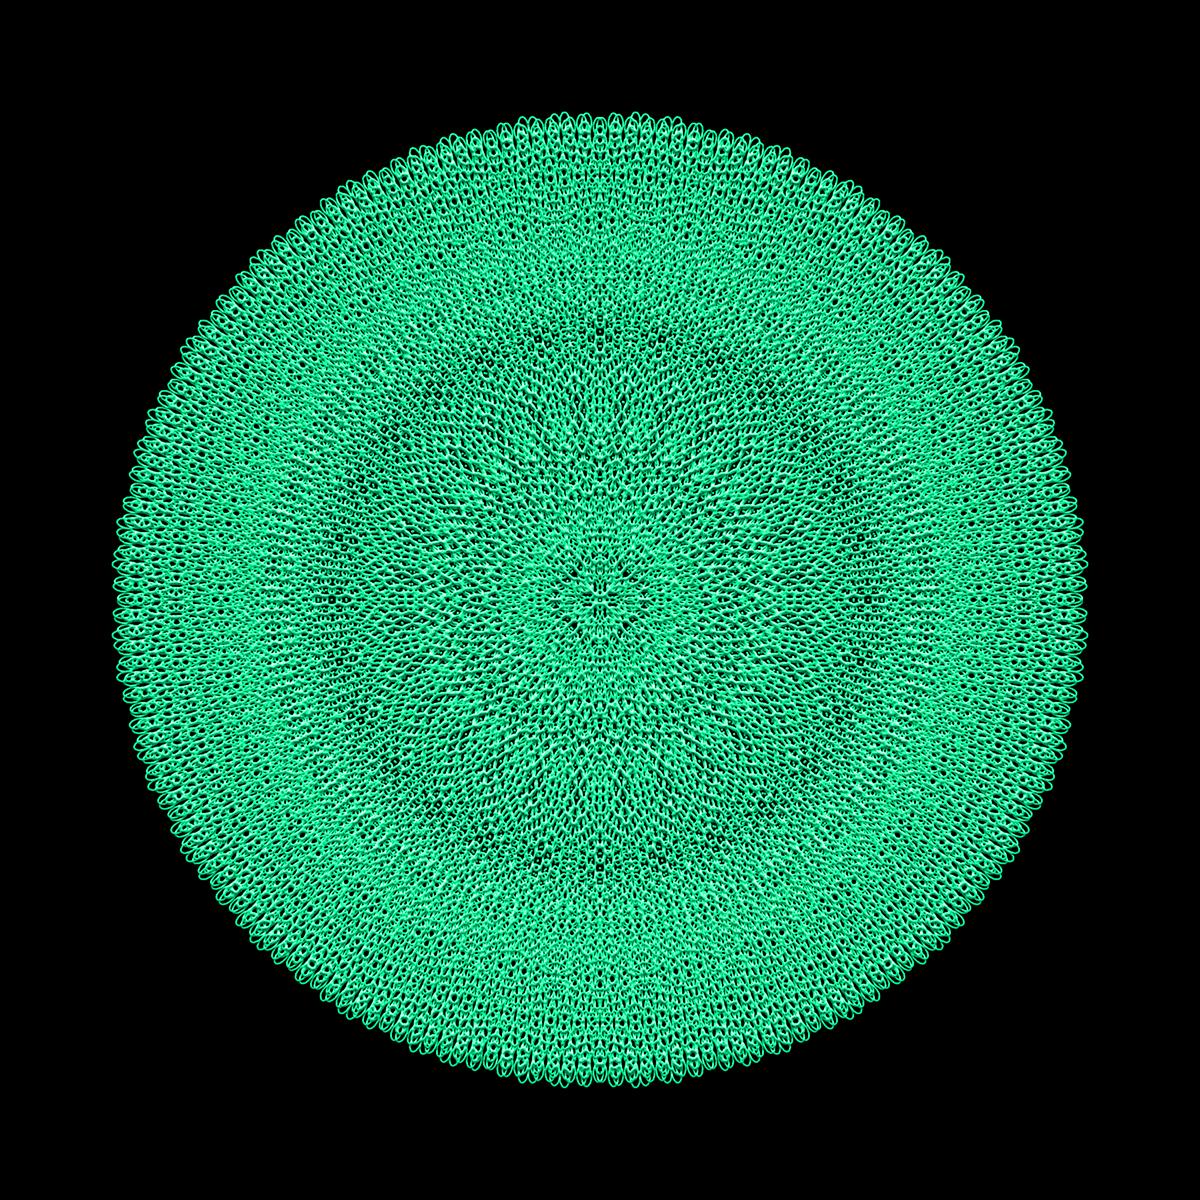 Image for entry 'Fermat Spiral Mandala 013.4.014d'